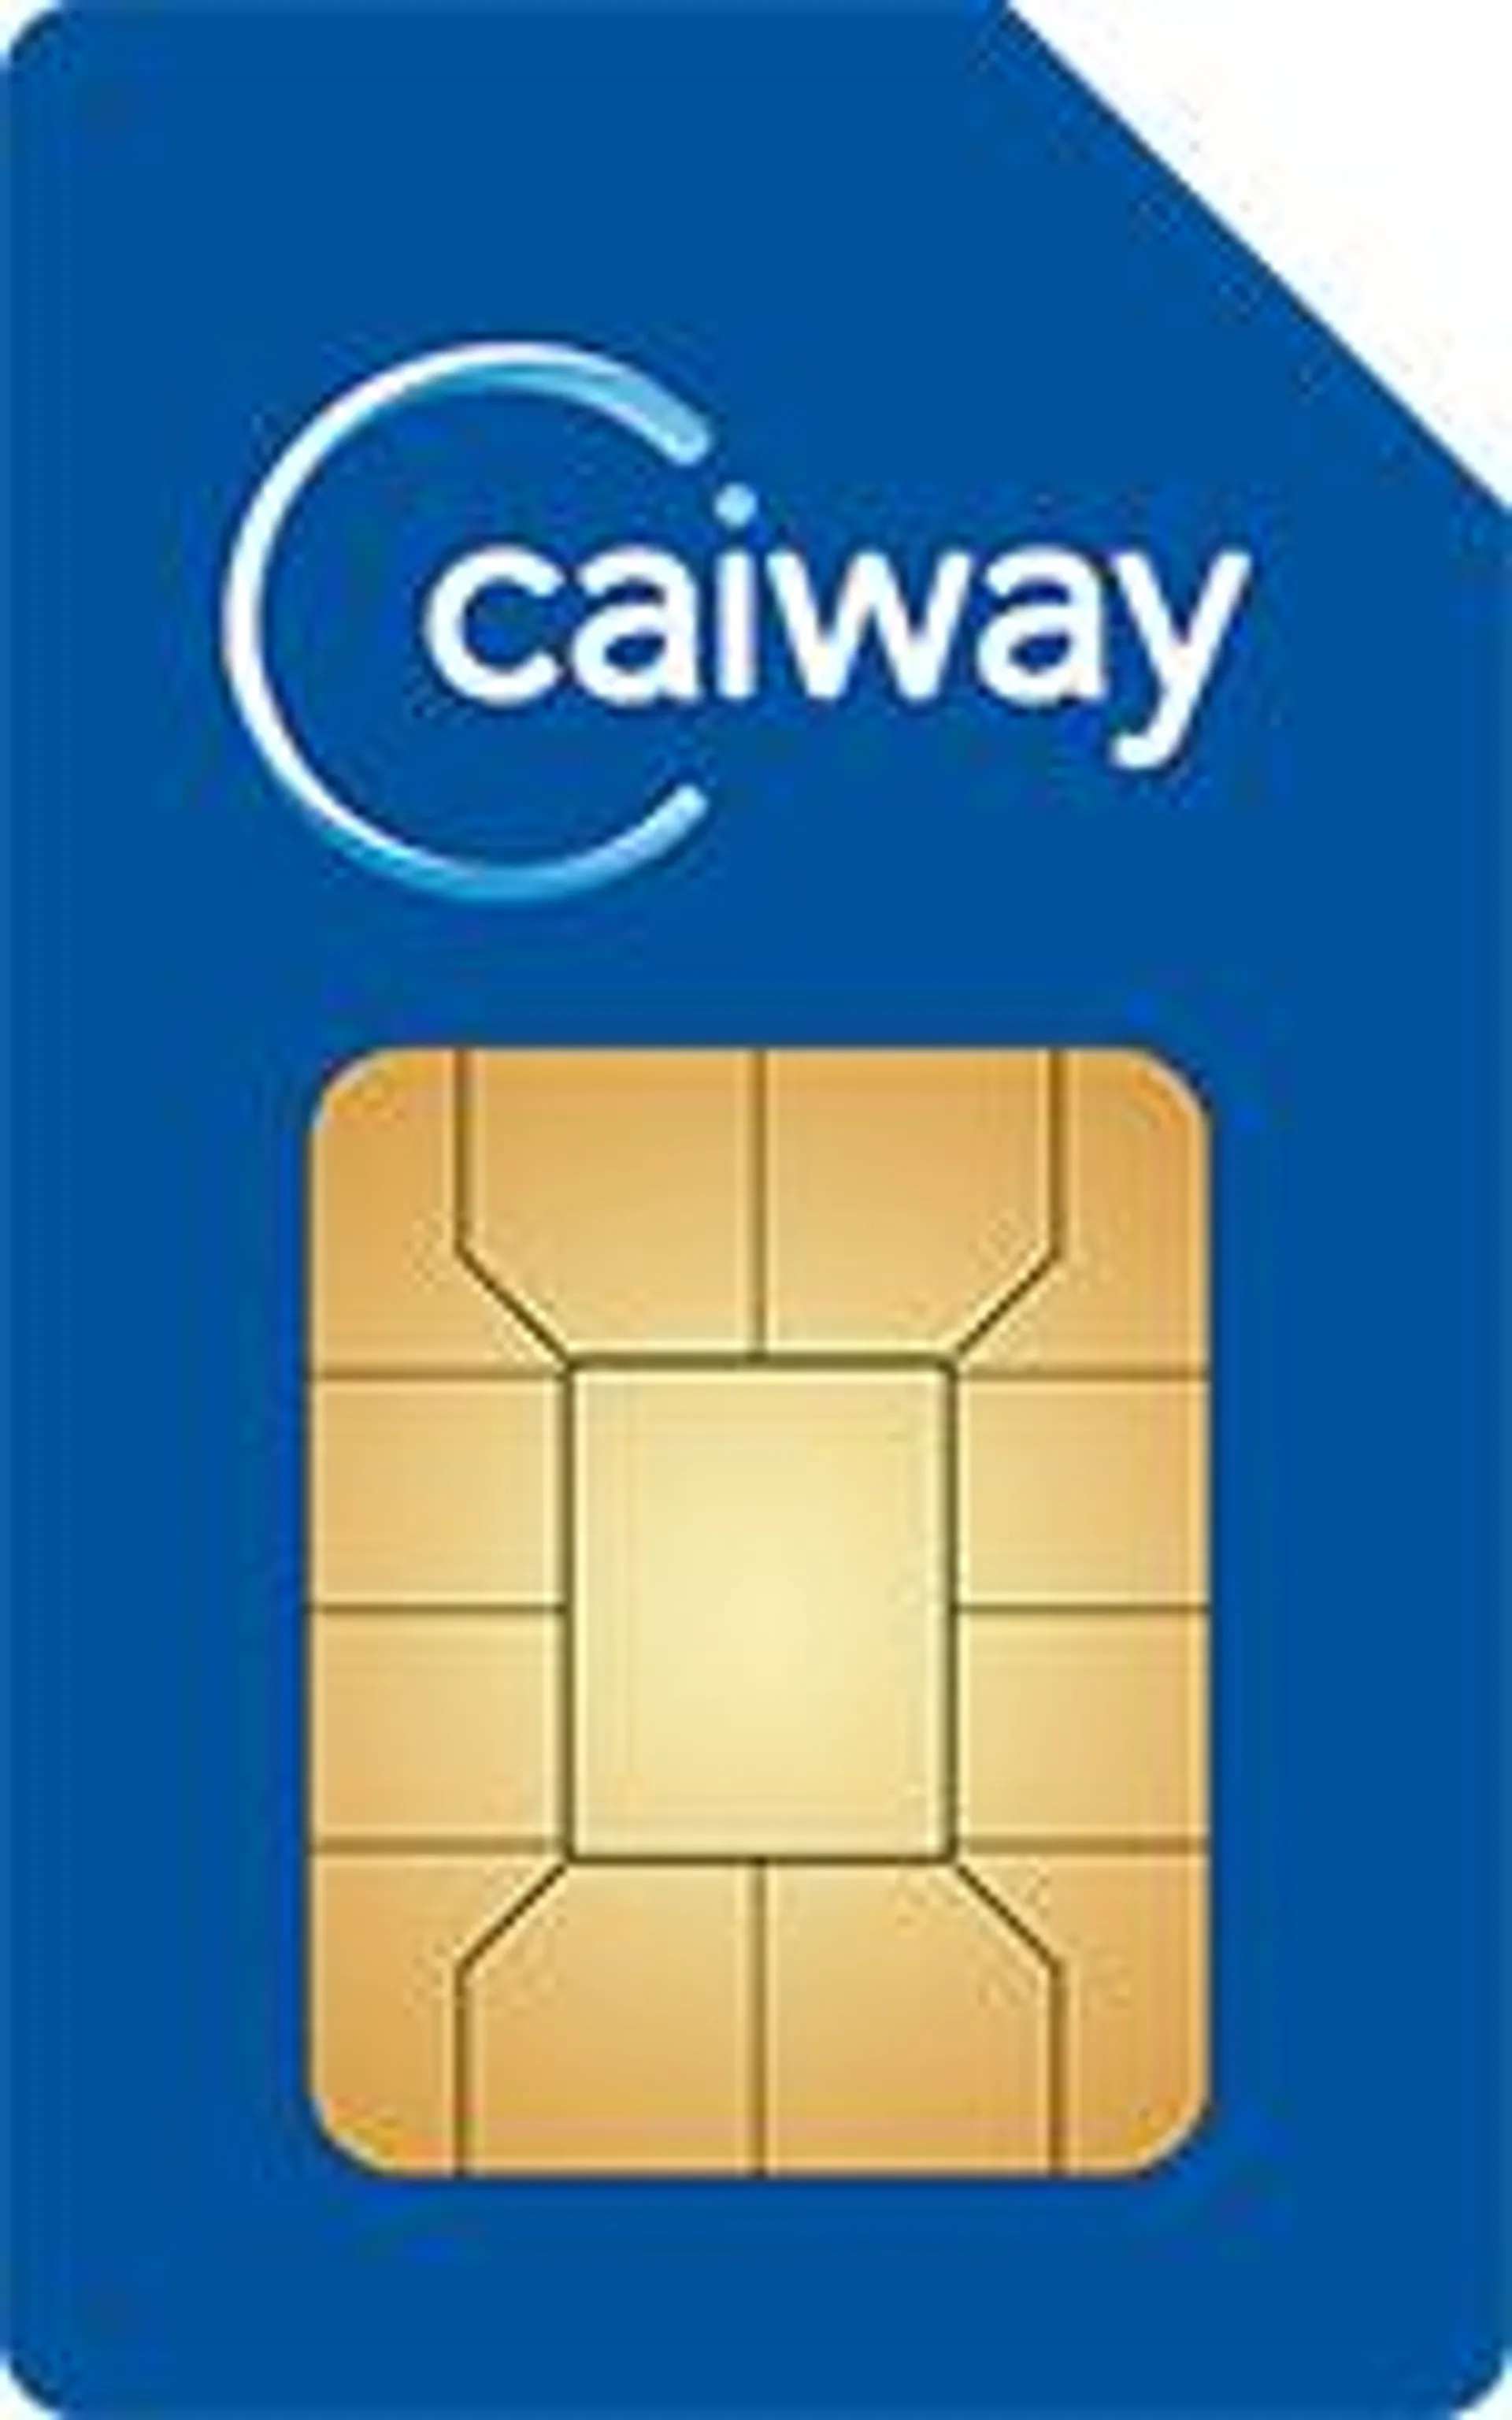 Caiway 7.5 GB + 120 min + 25 sms - 2 jaar - Sim Only